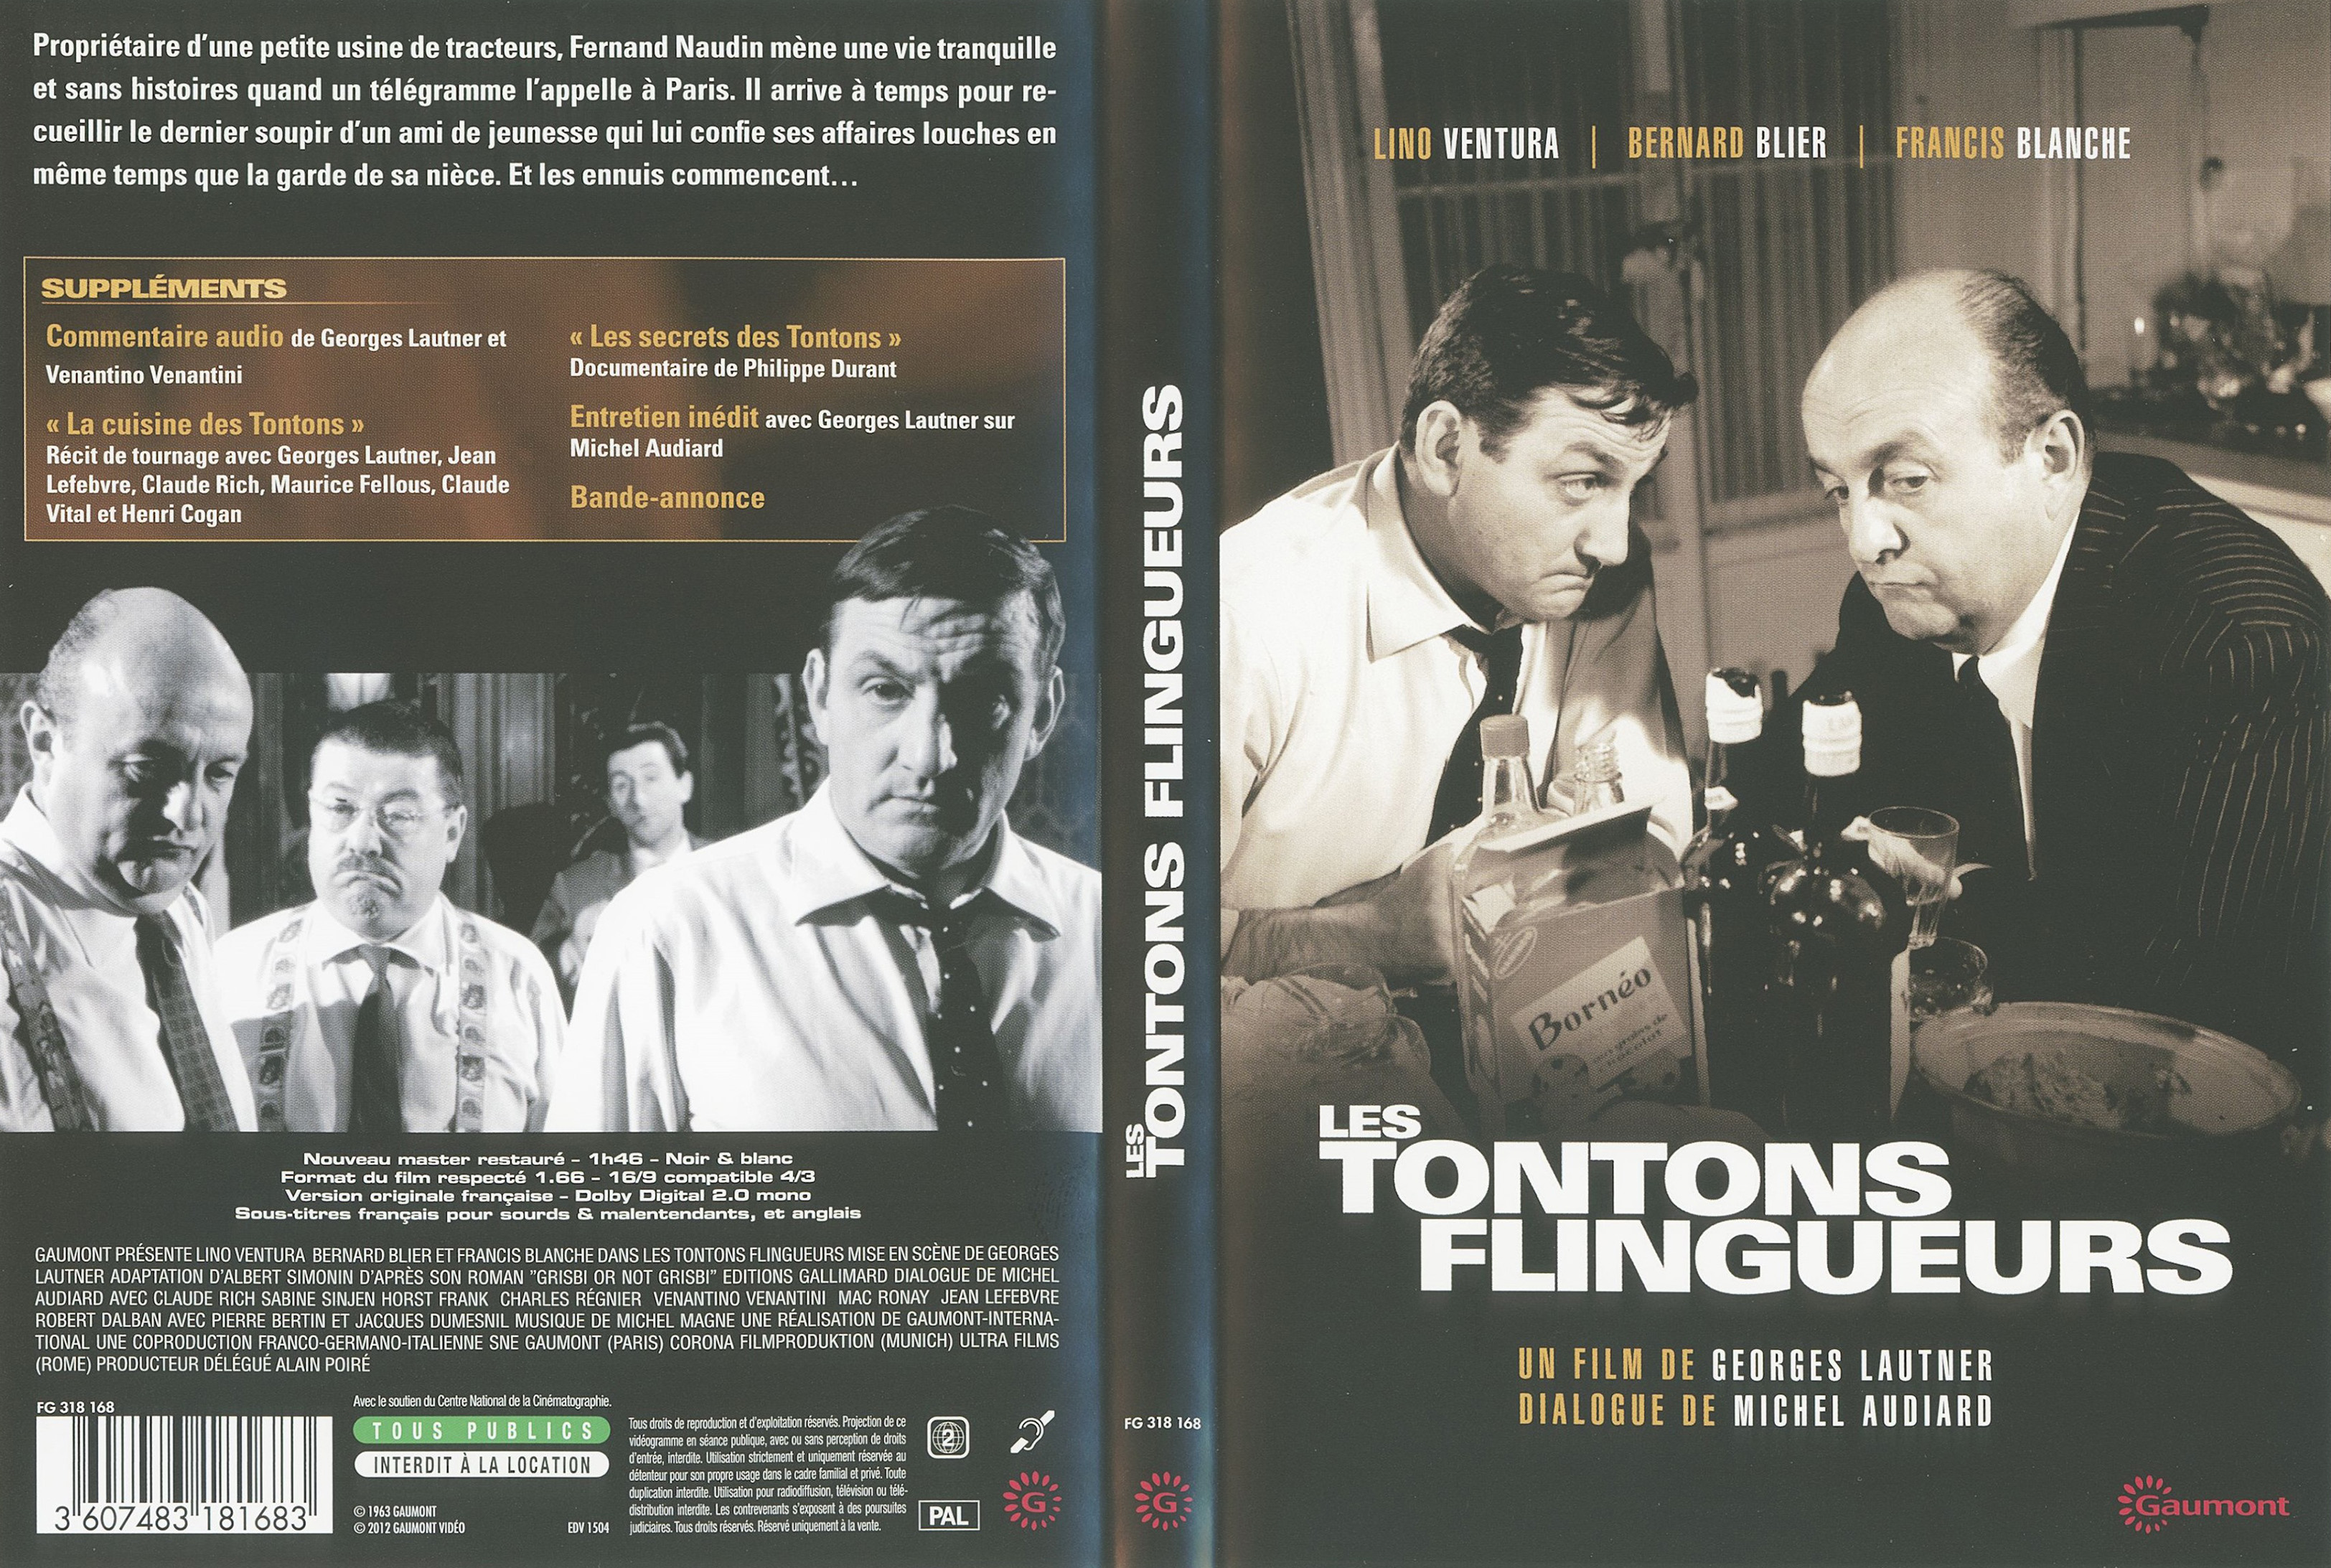 Jaquette DVD Les tontons flingueurs v3